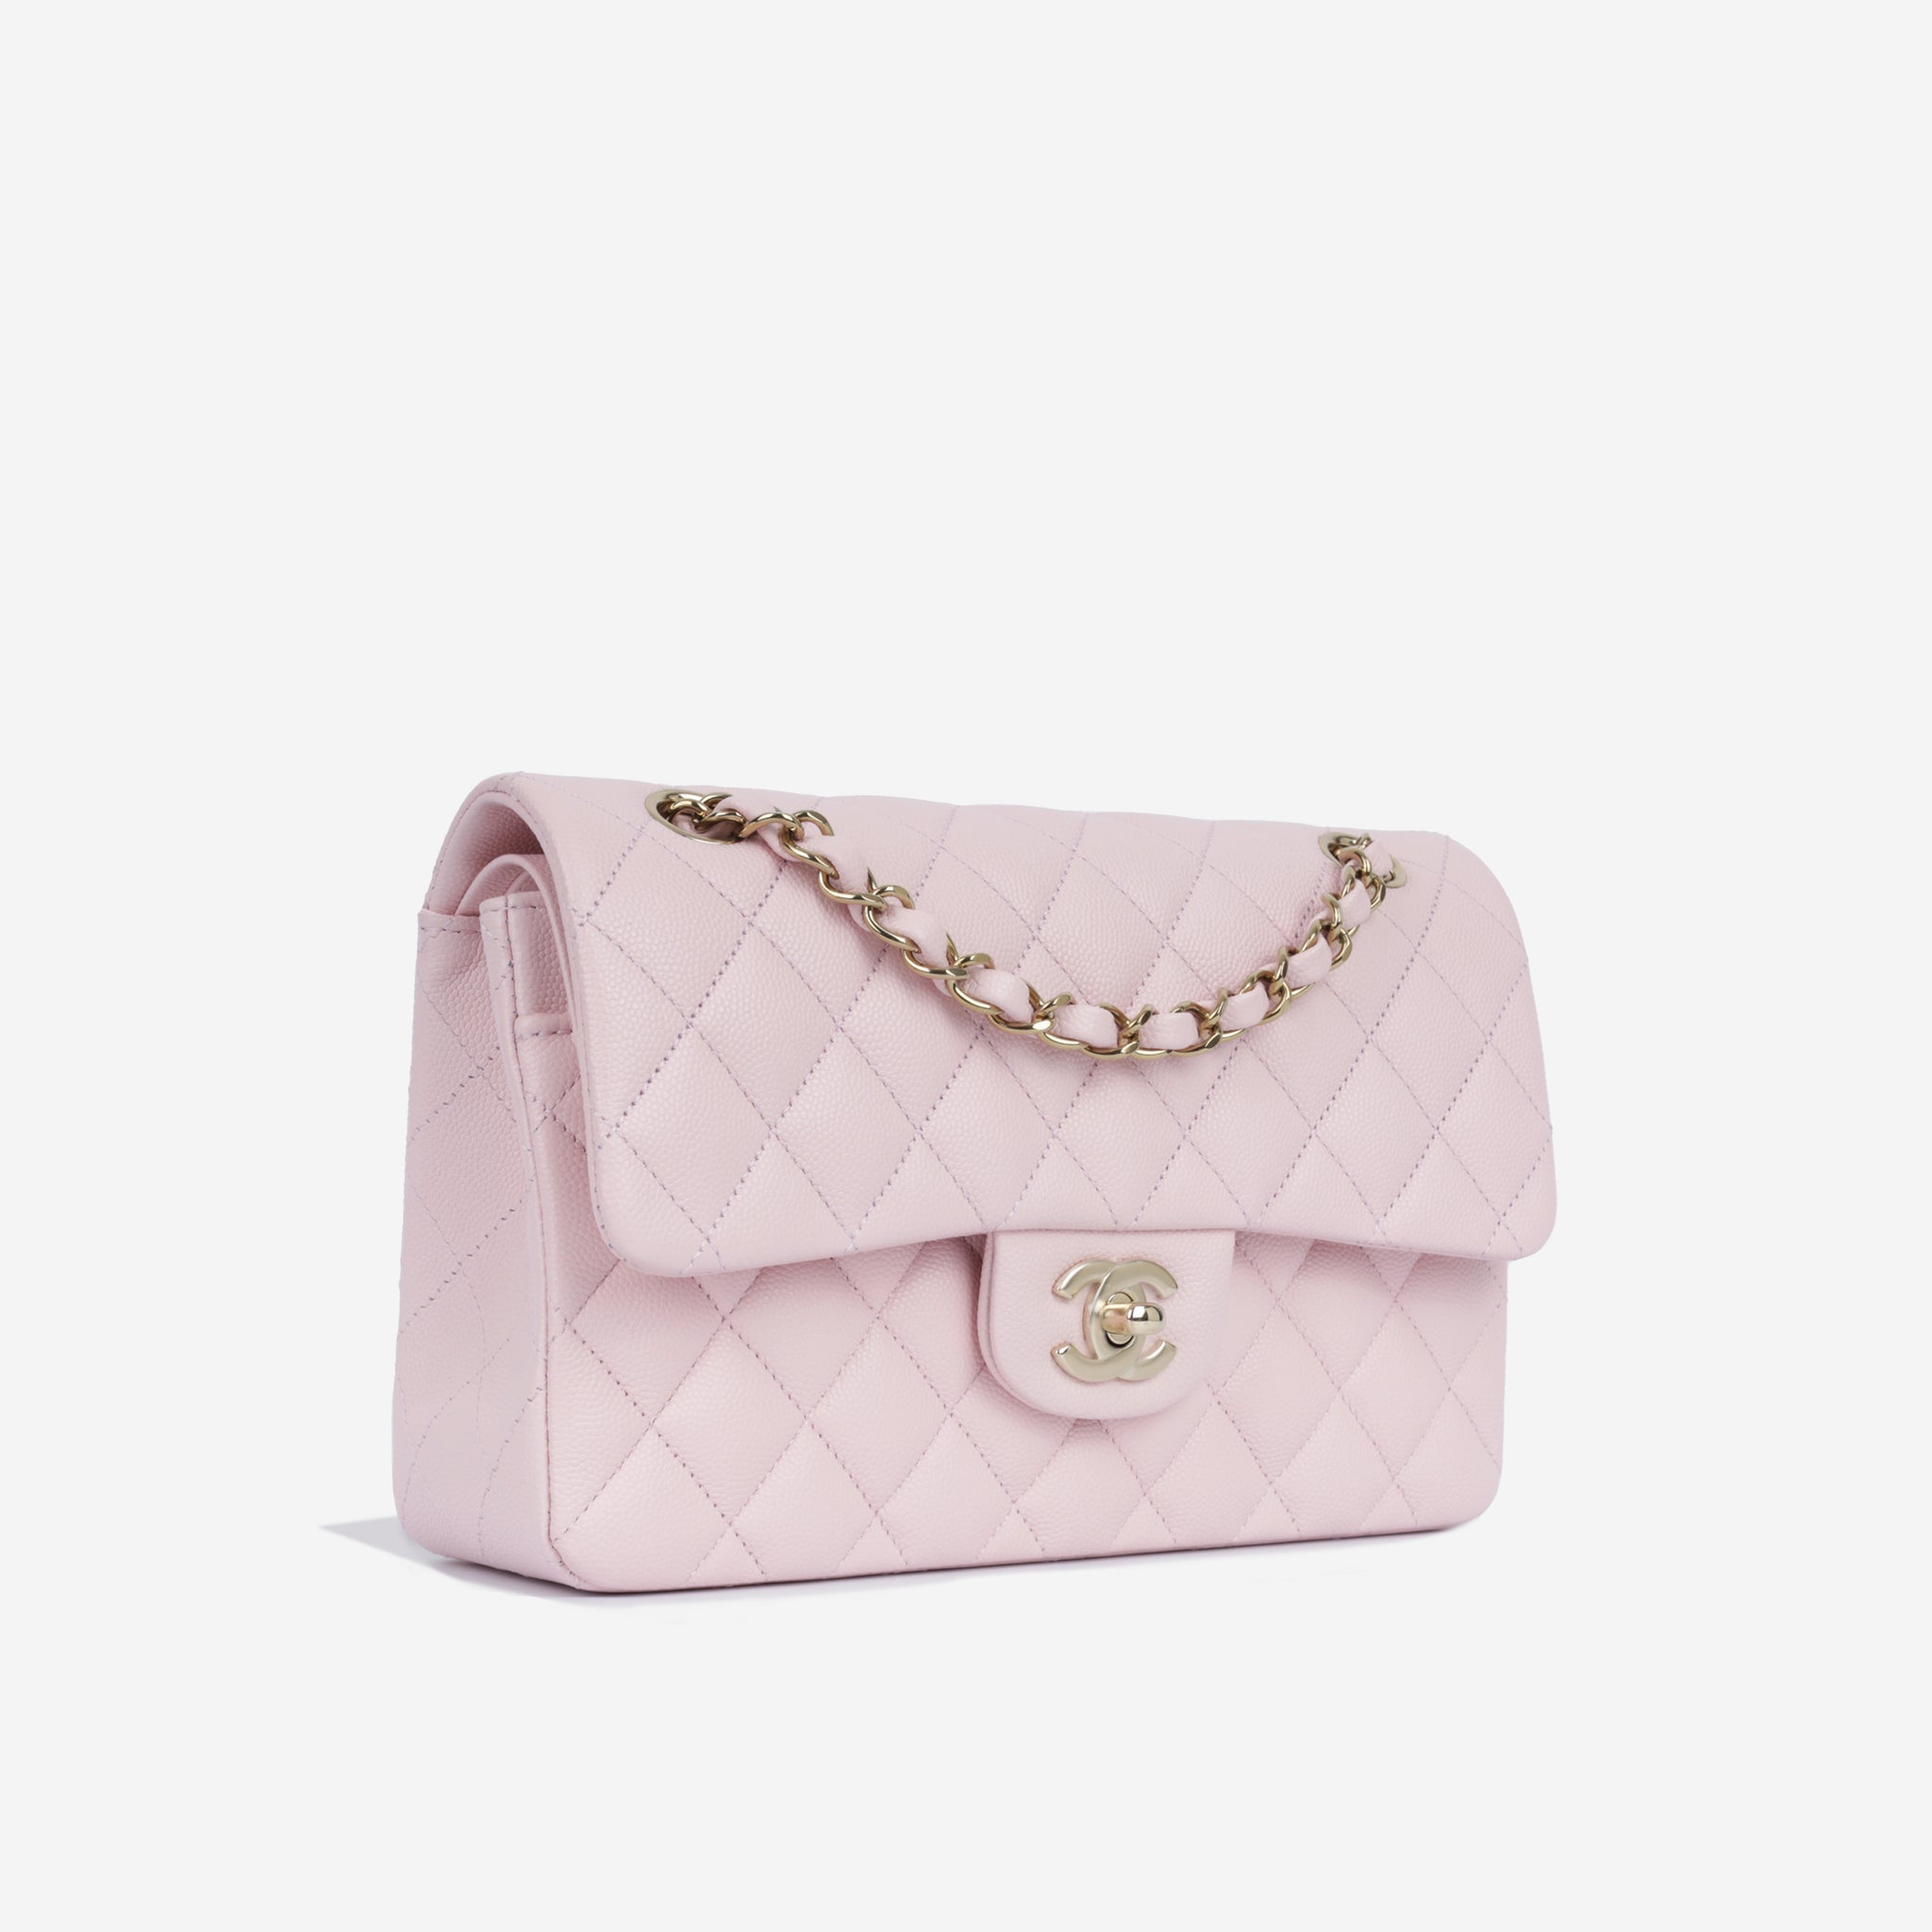 Chanel - Small Classic Flap Bag - Light Pink Caviar CGHW - Brand